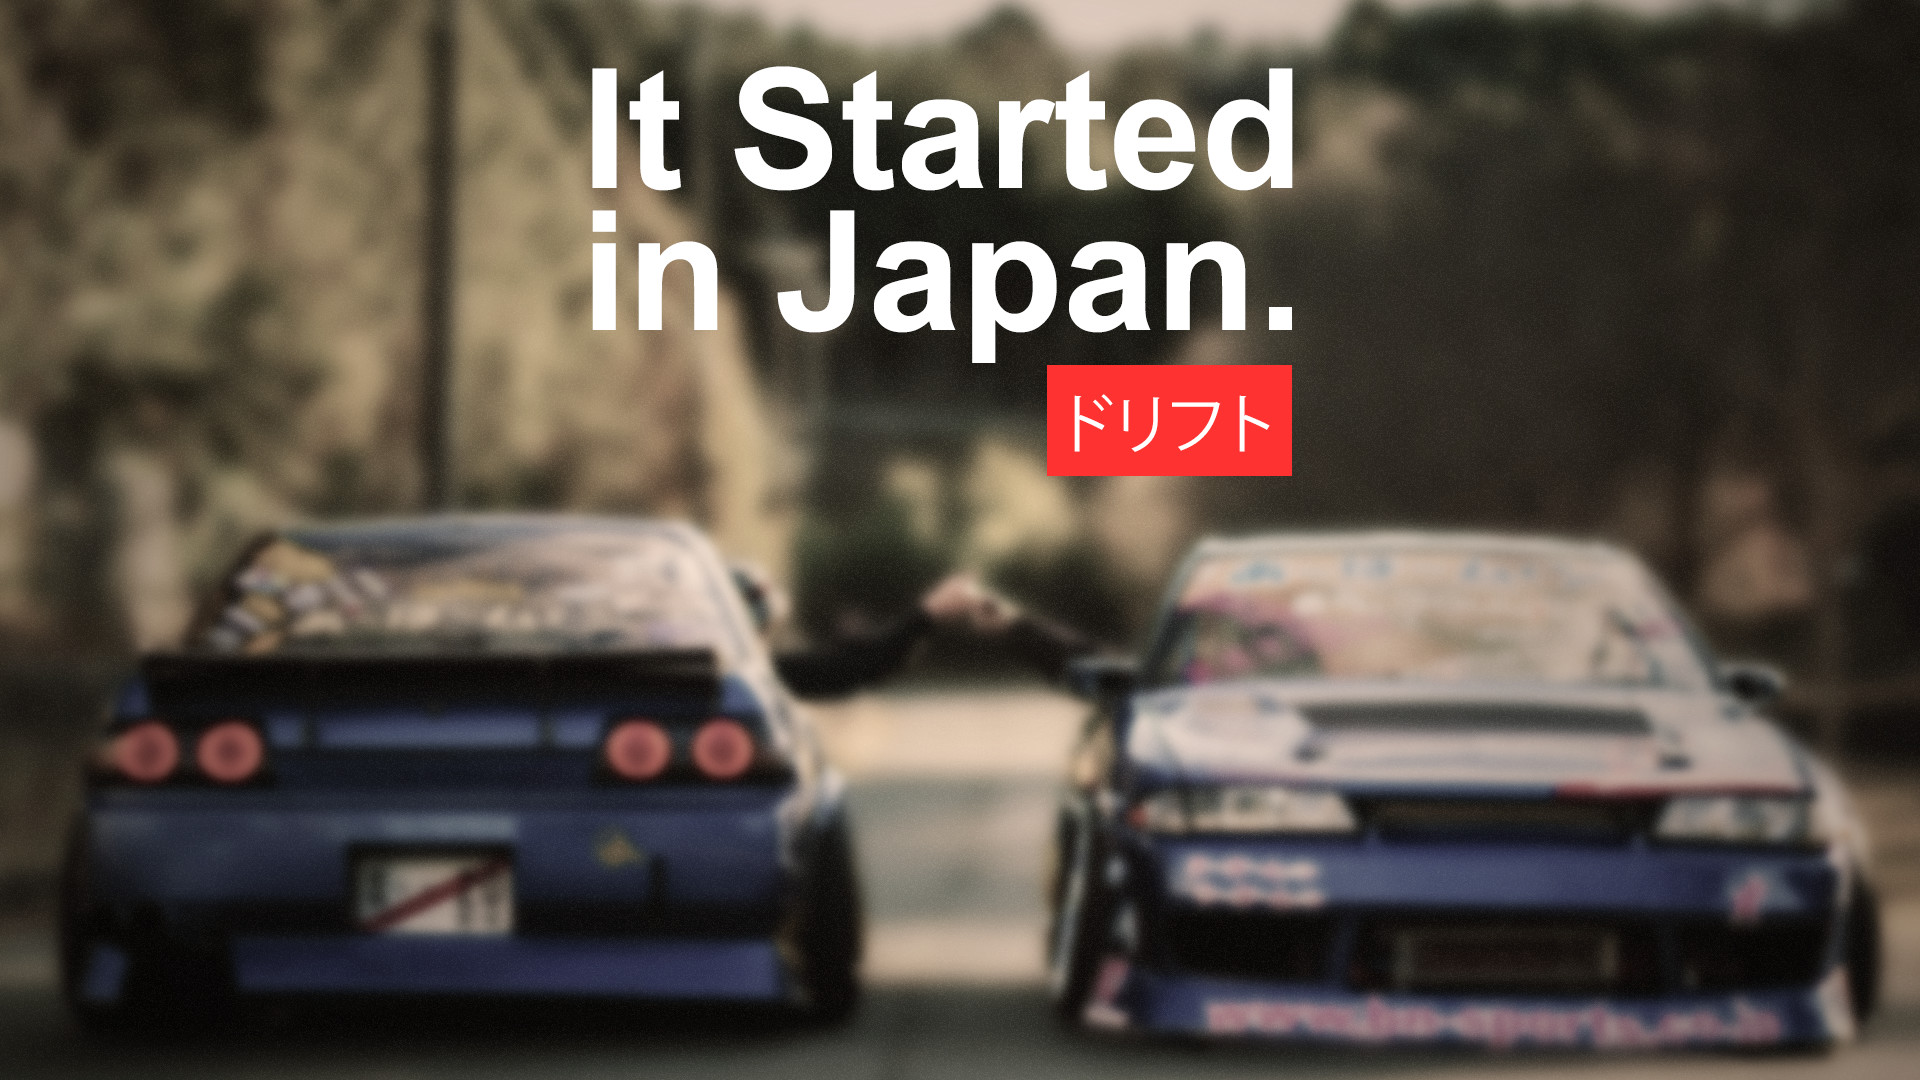 General car Japan drift Drifting racing vehicle Japanese cars import tuning modified skyline Nissan Nissan